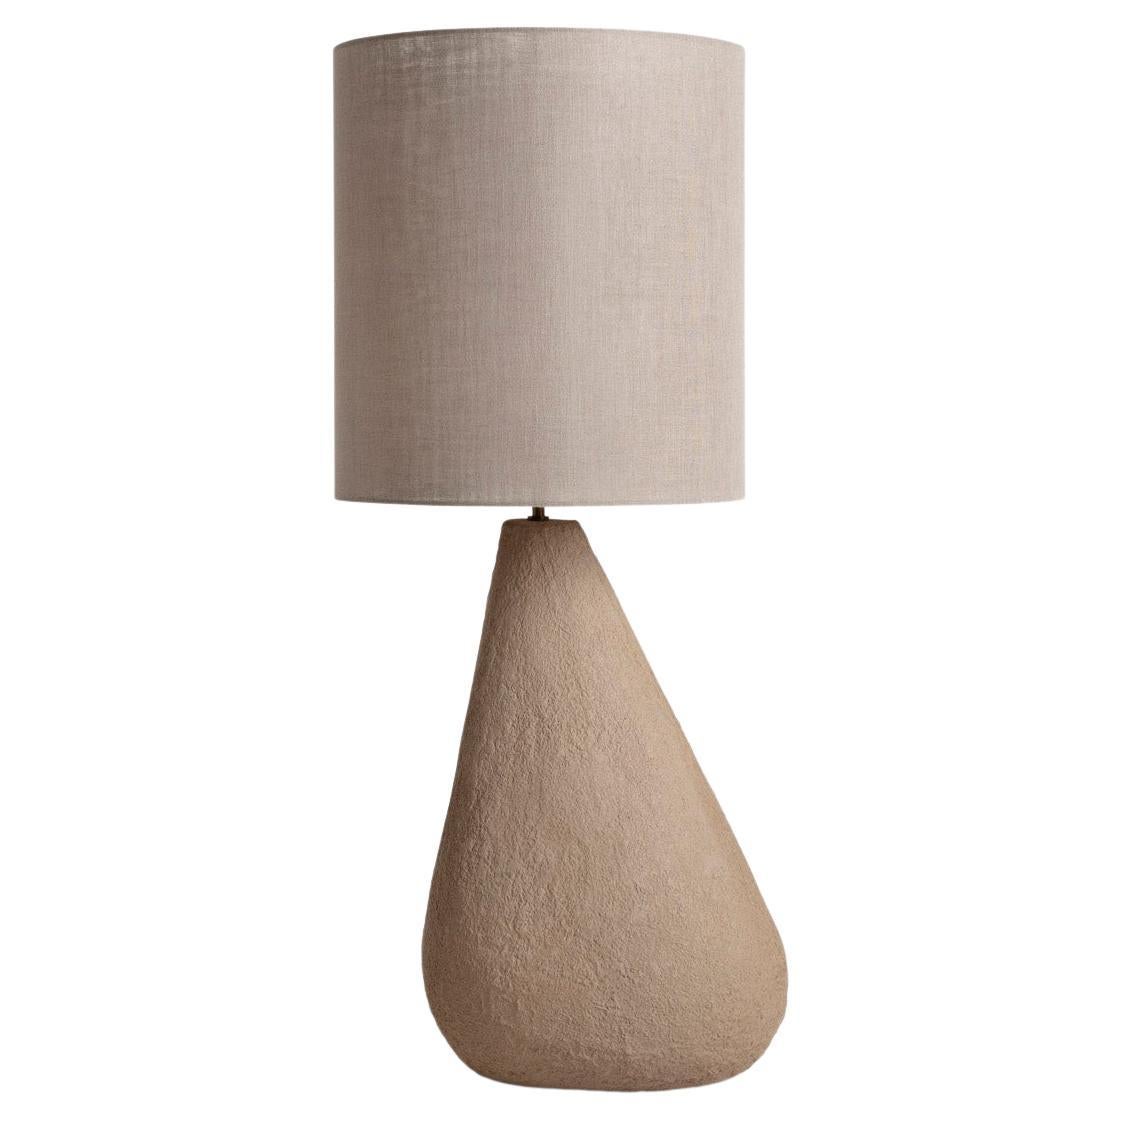 Breaco Handmade Ceramic Table Lamp For Sale